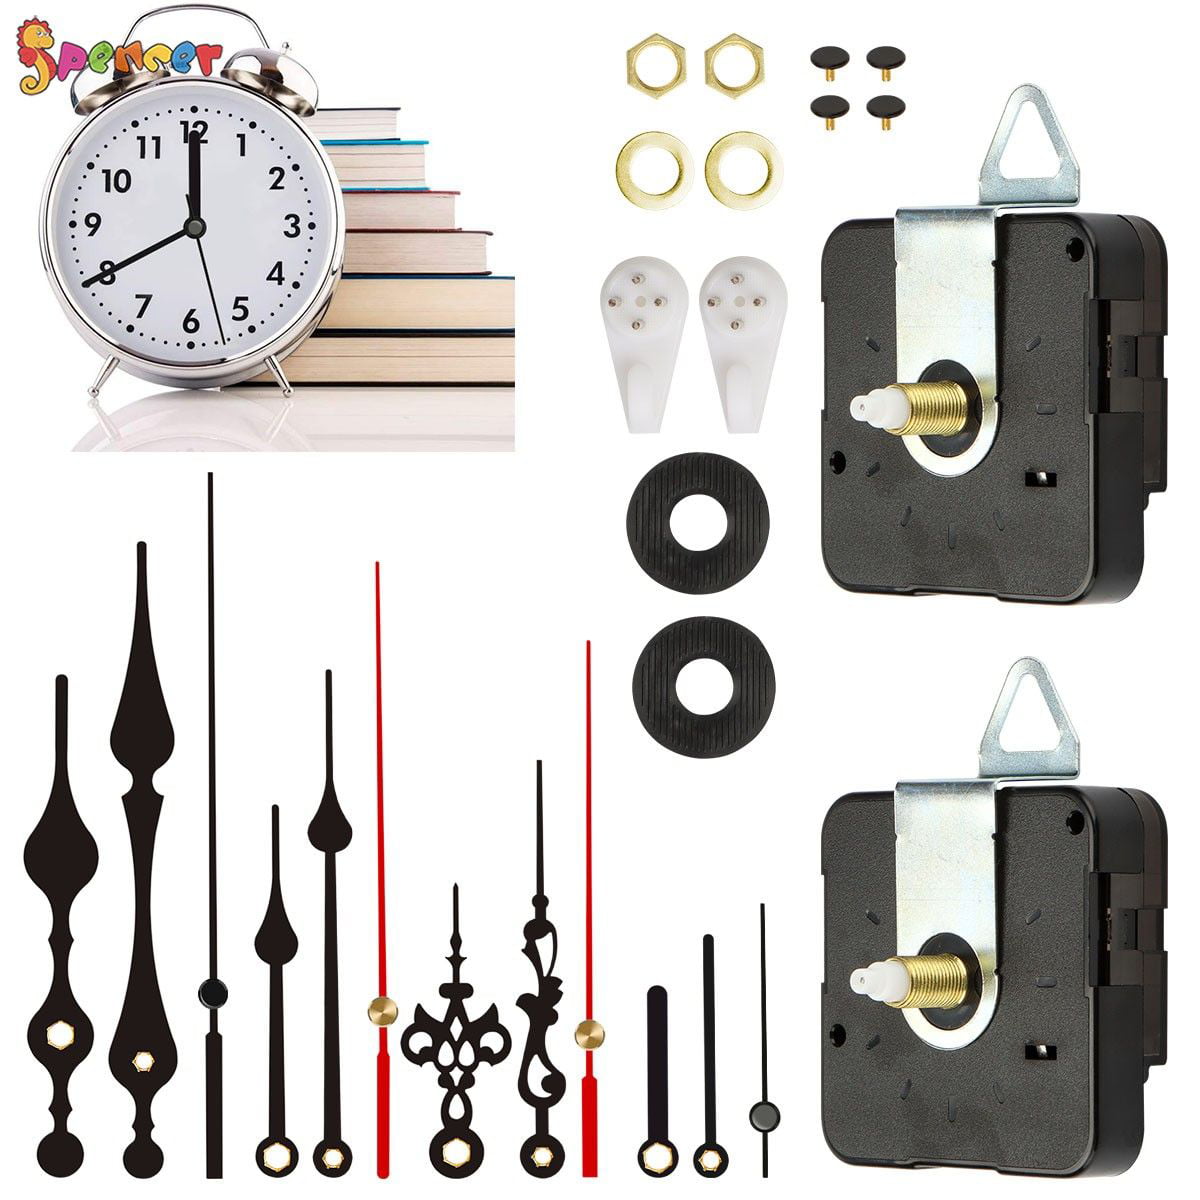 High Torque Quartz Clock Movement Motor Controlled Mechanism Kit Hour Minute Set 